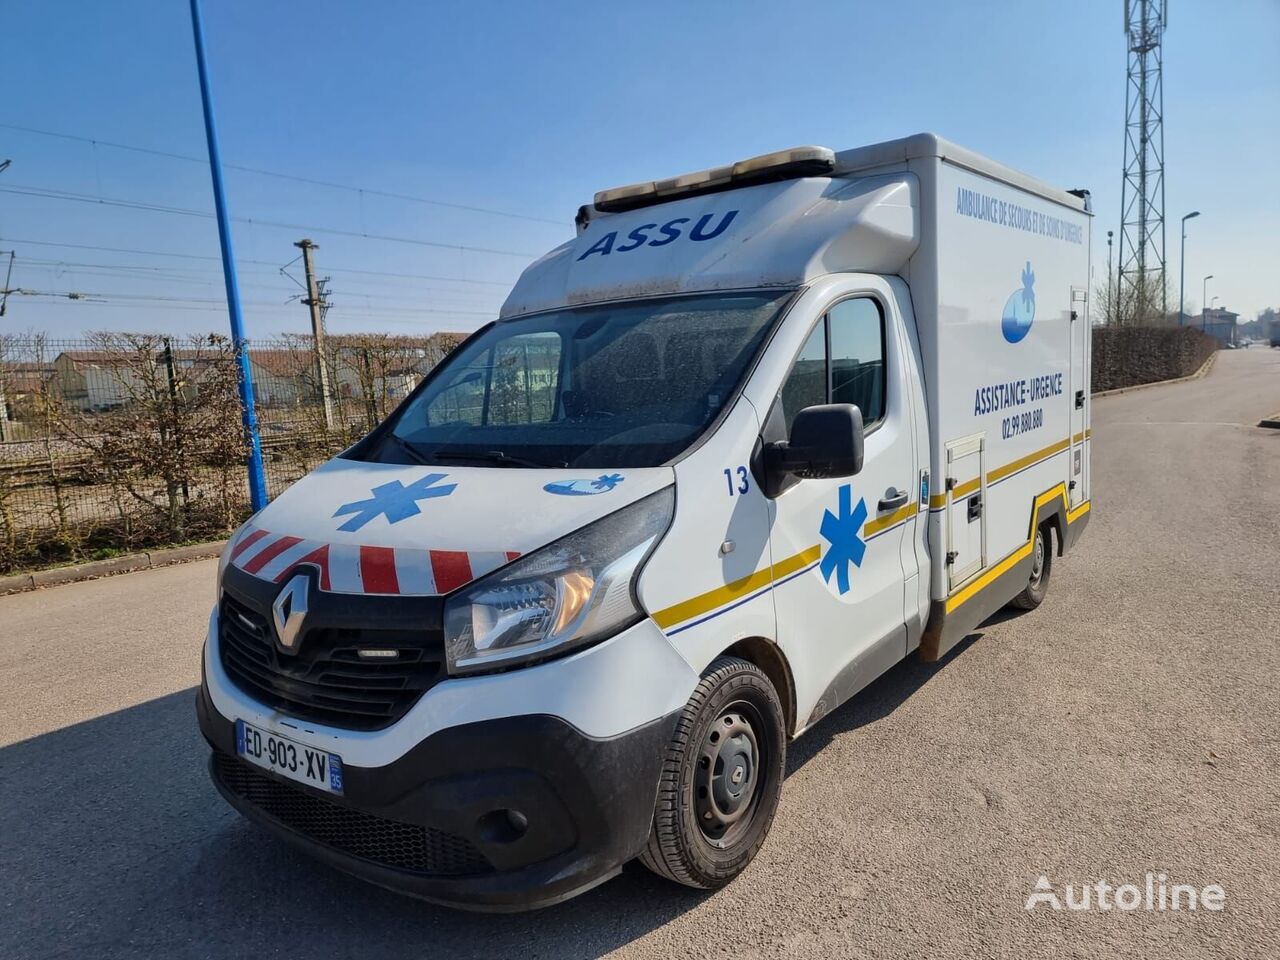 Renault TRAFIC CELLULE CARREE - 2016 ambulance